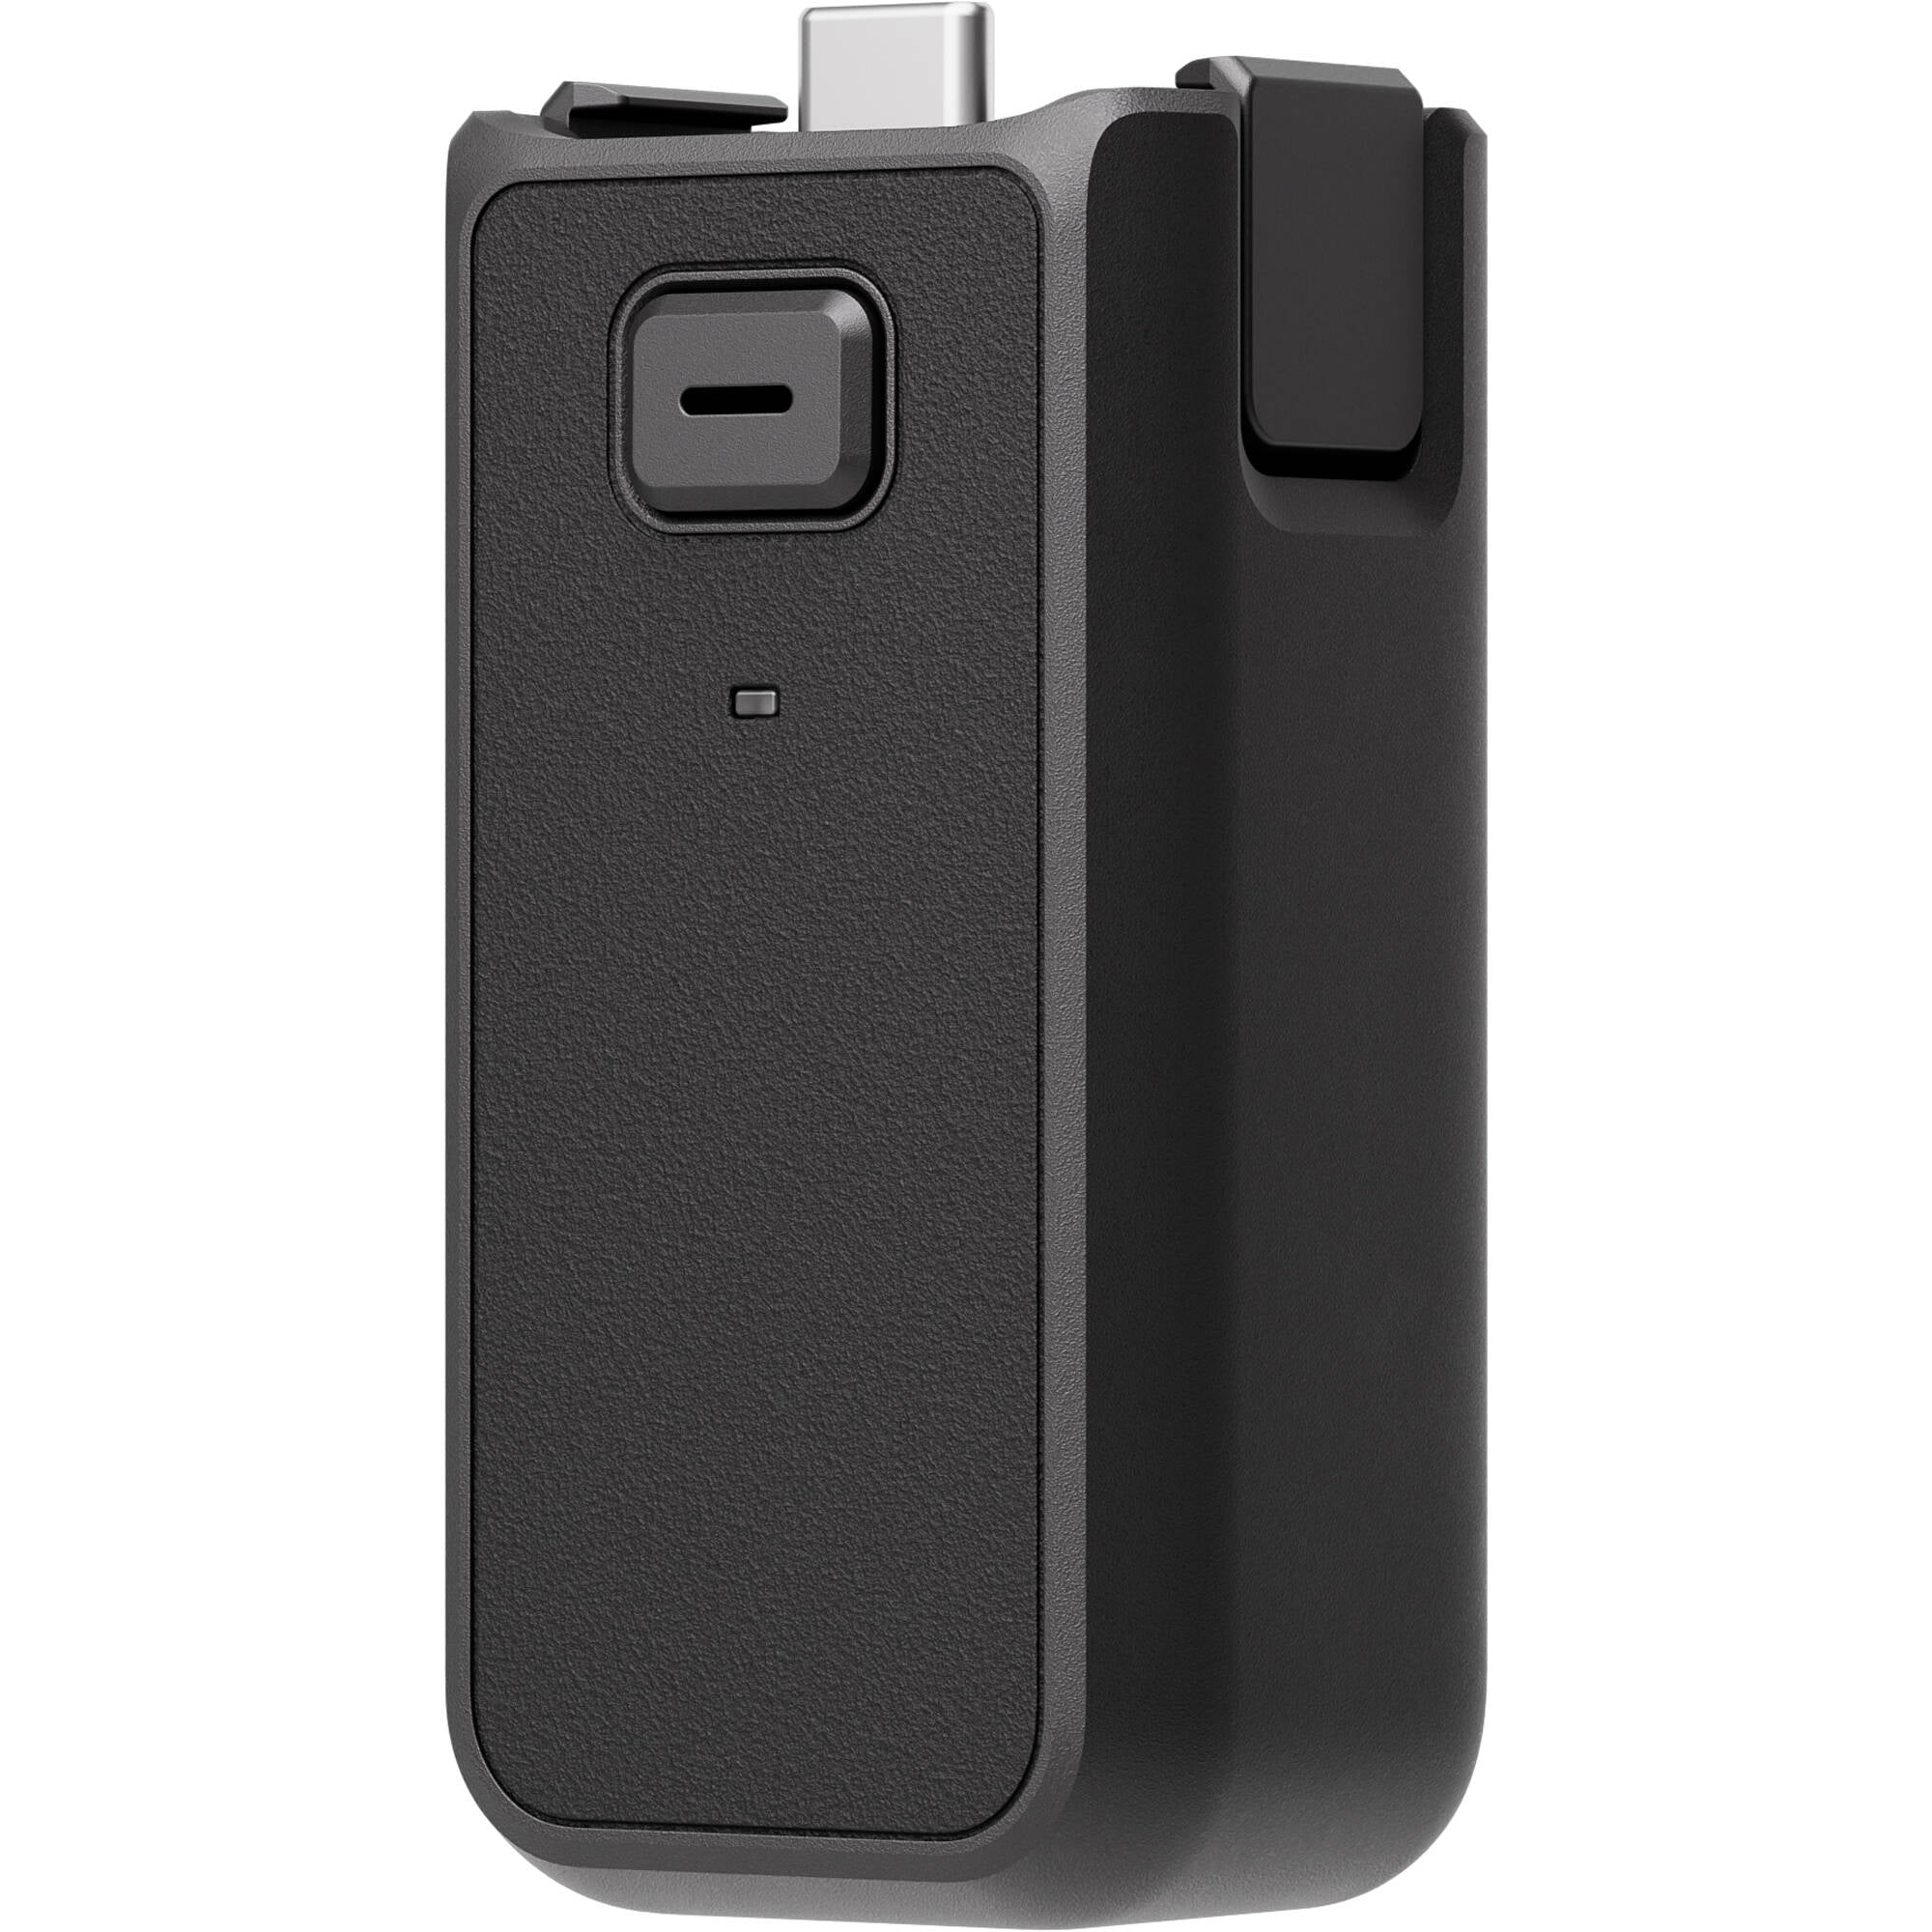 Osmo Pocket 3 Battery Handle